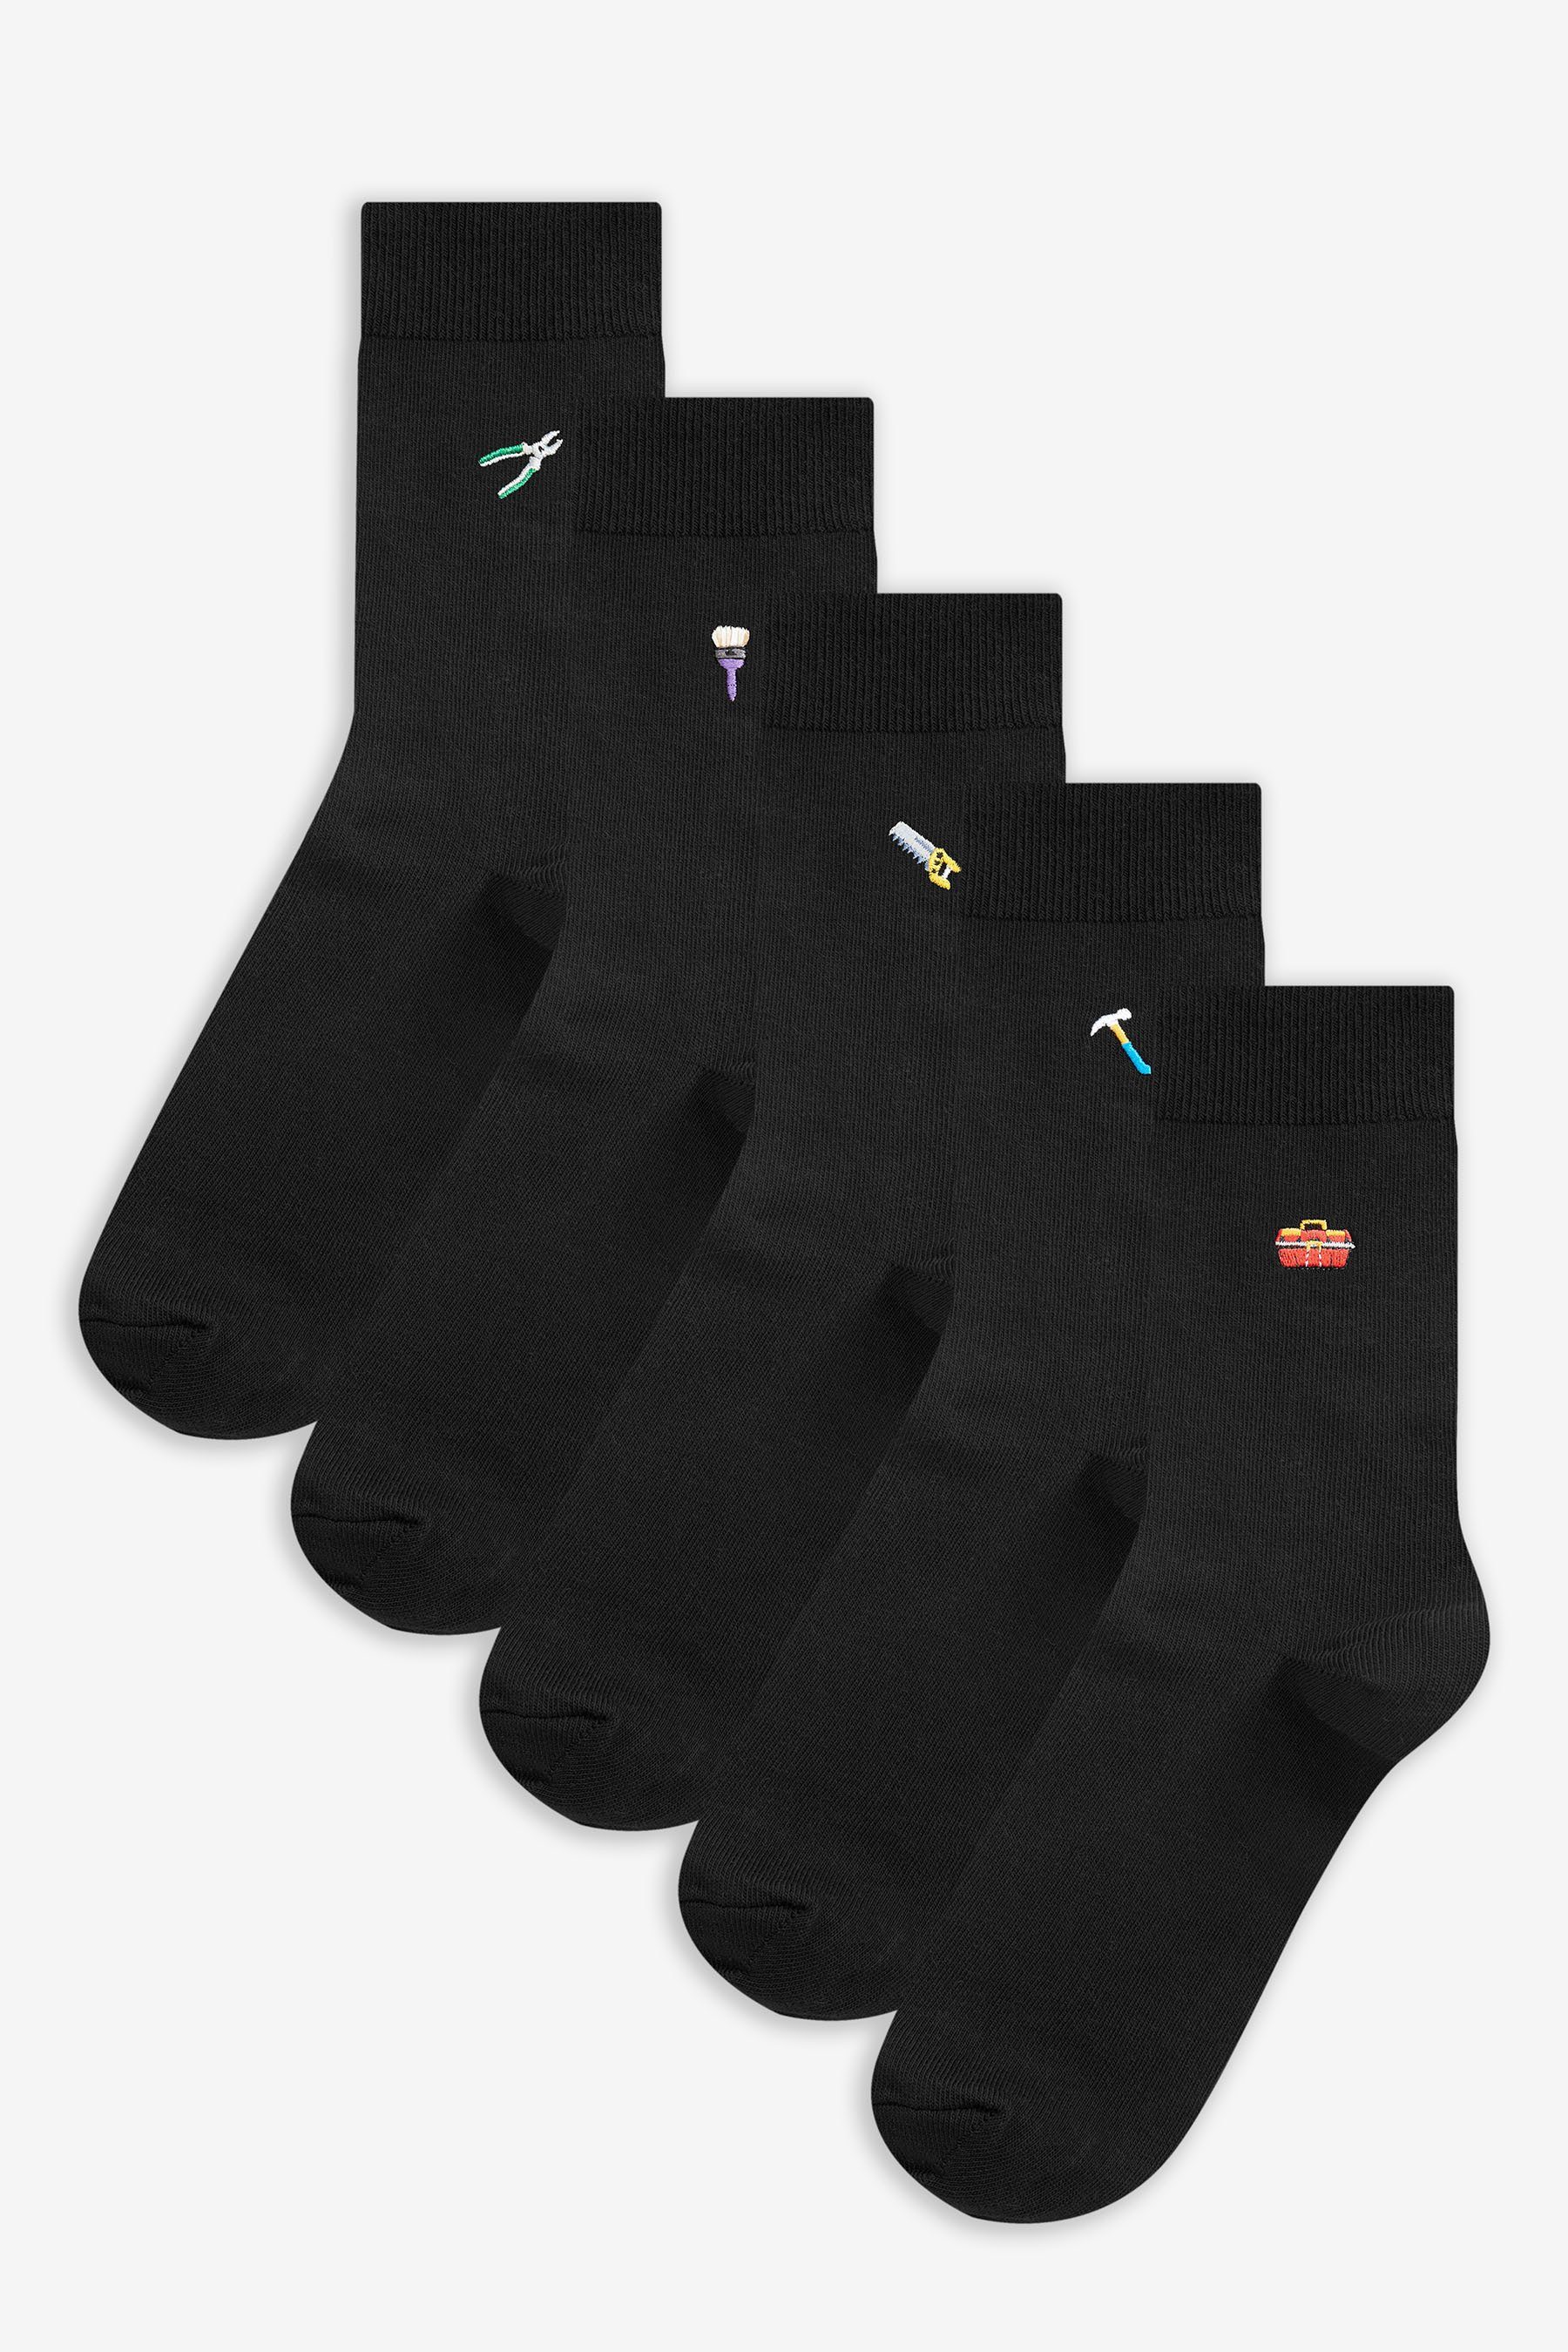 Stickerei Black (5-Paar) Socken Kurzsocken 5er-Pack mit Next Tools DIY